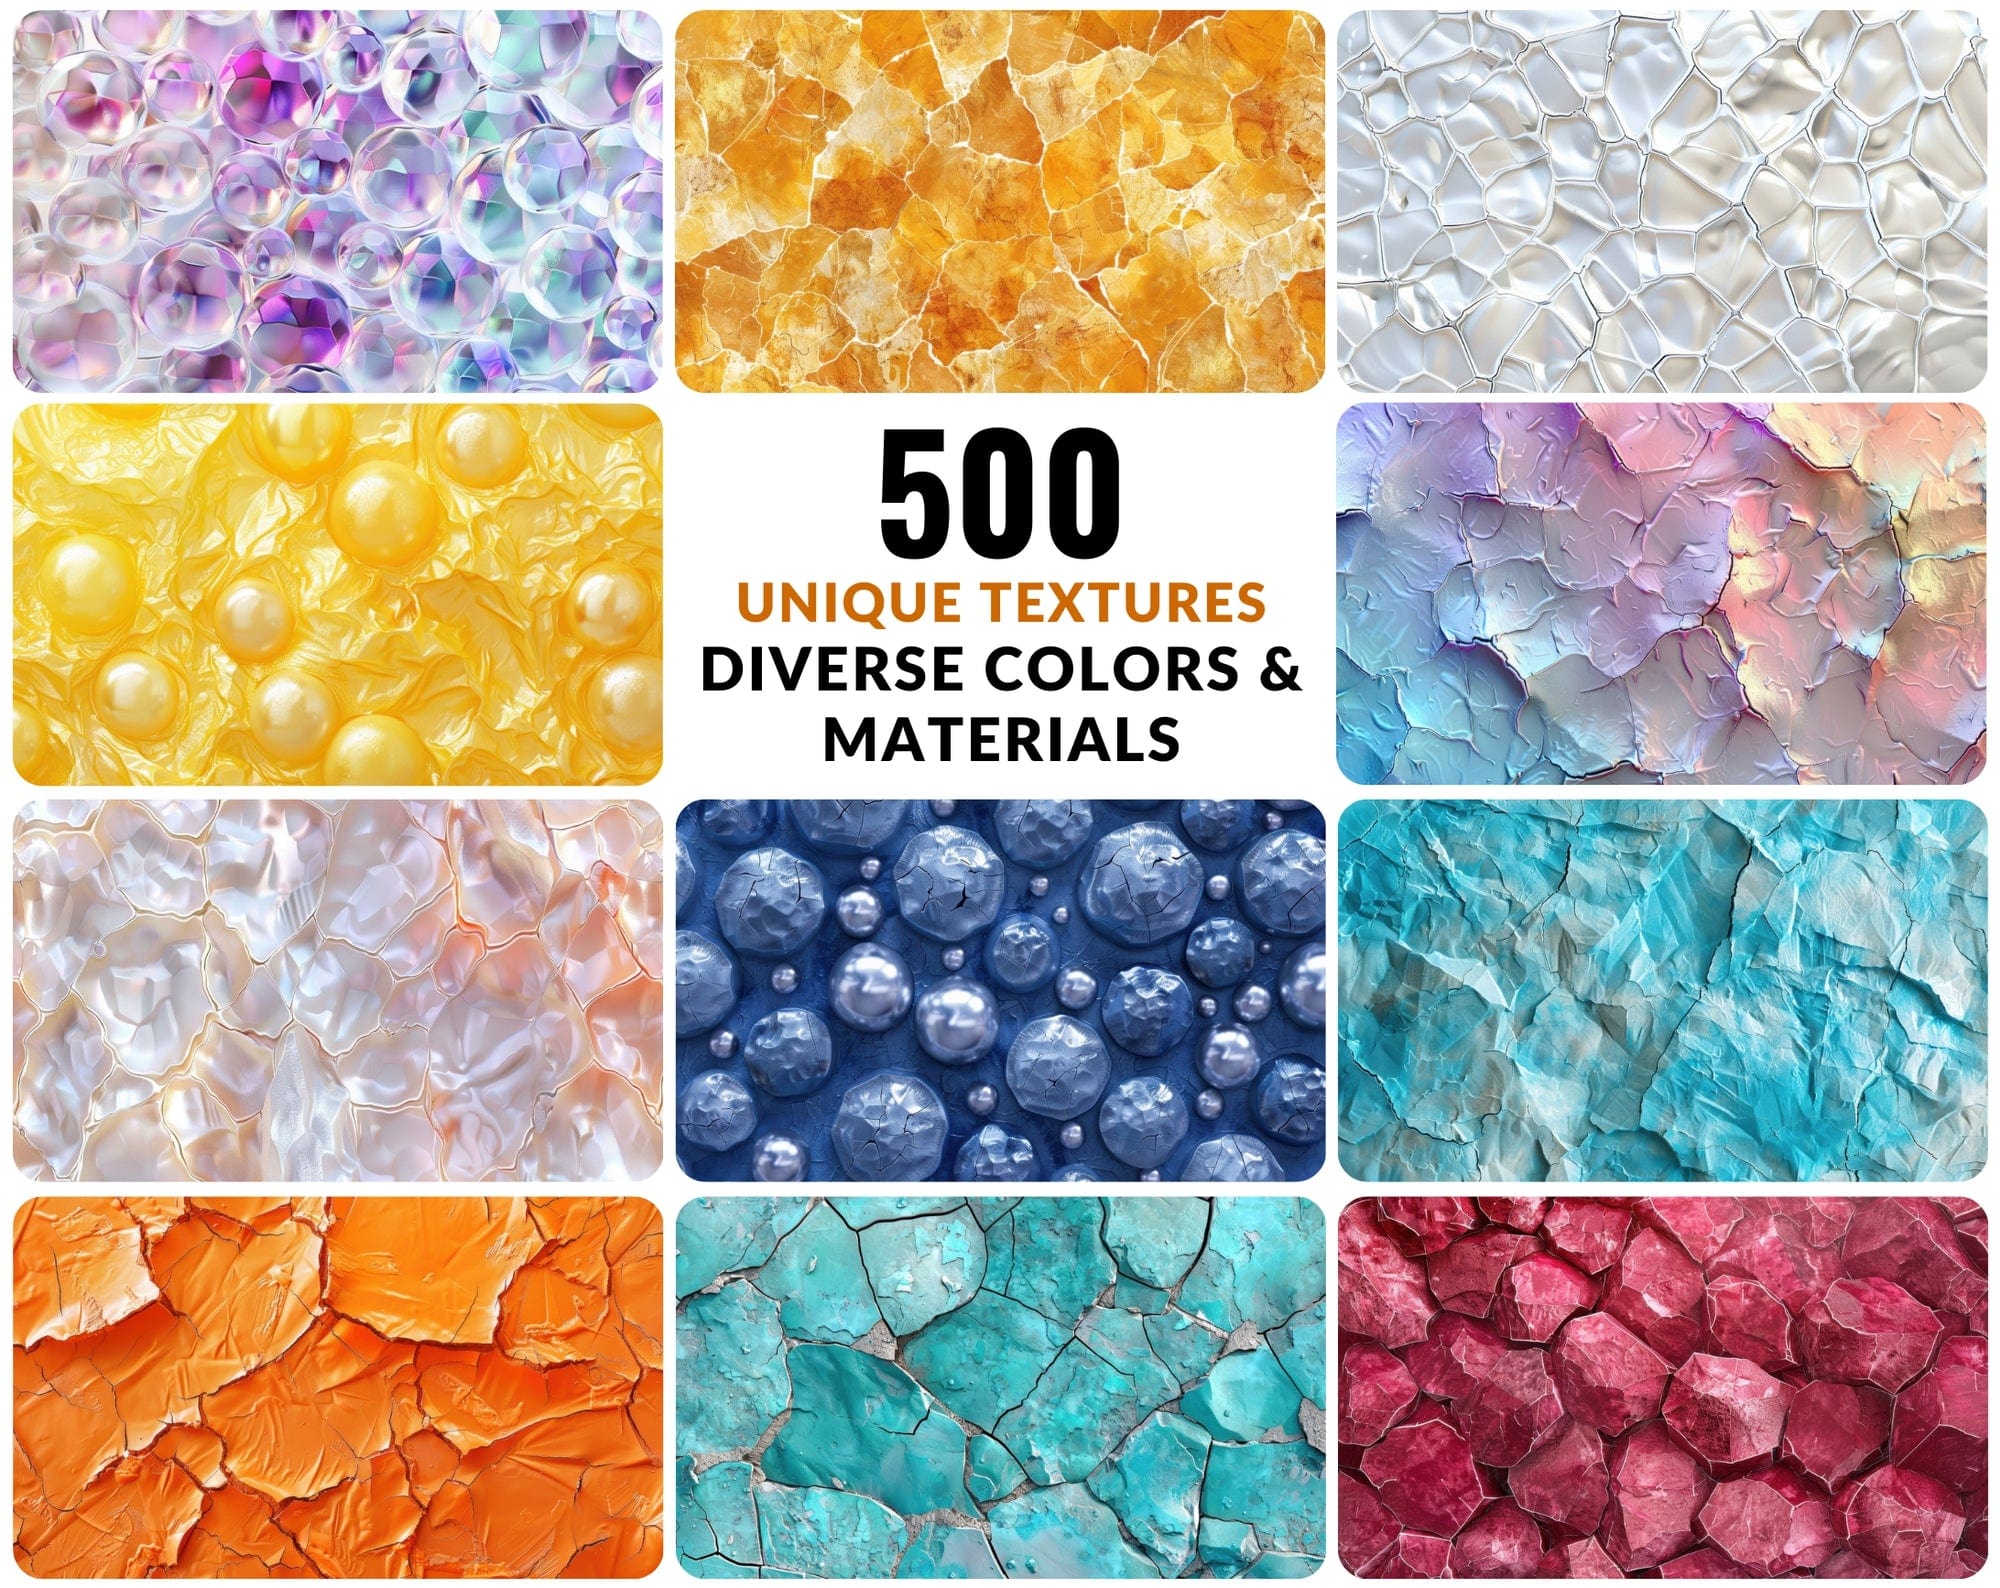 500 Diverse Textures - Satin & Pearl Look | Commercial License Included Digital Download Sumobundle